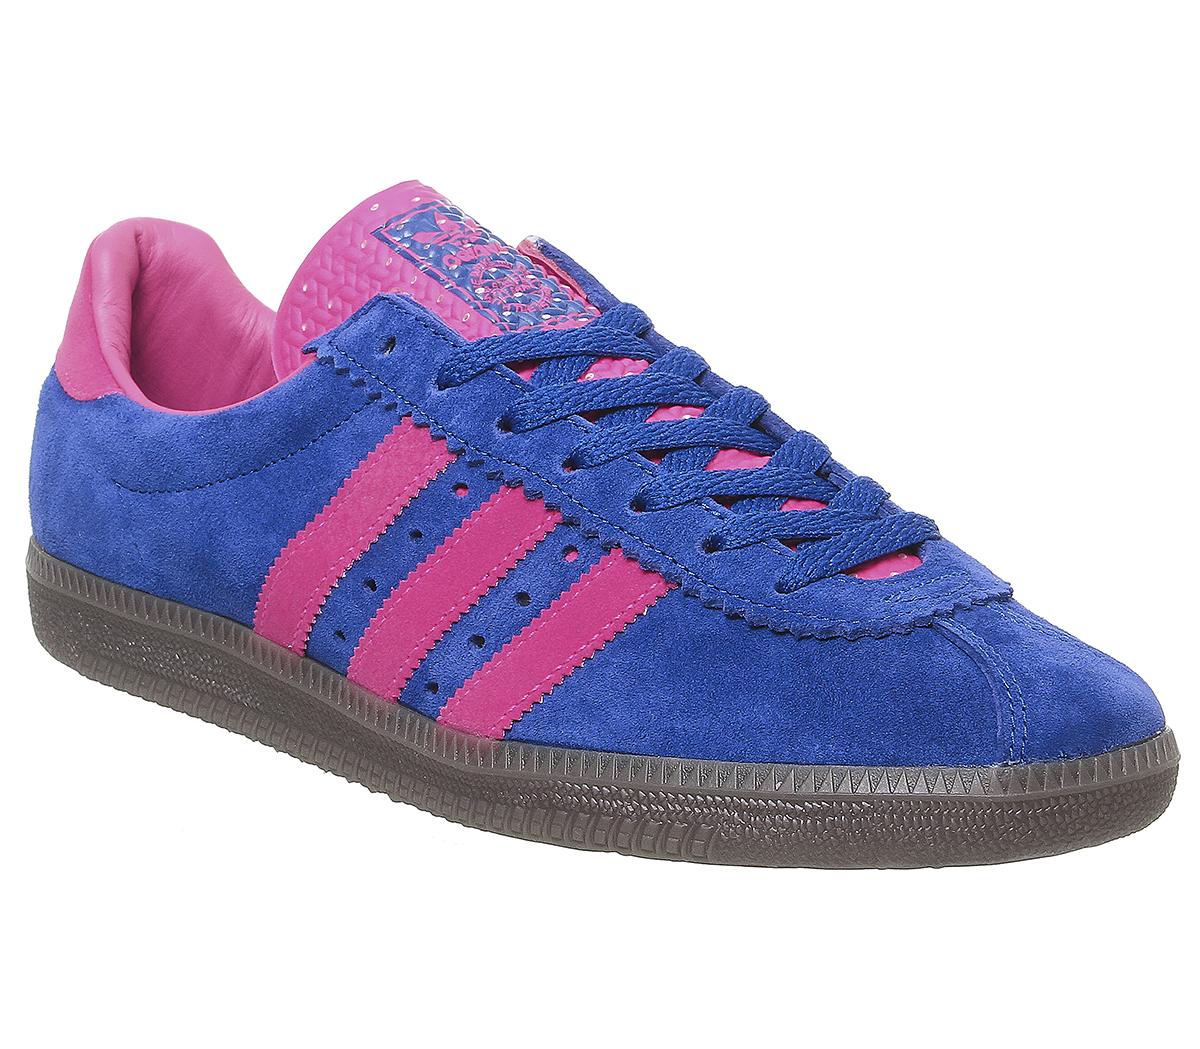 adidas padiham blue pink sale